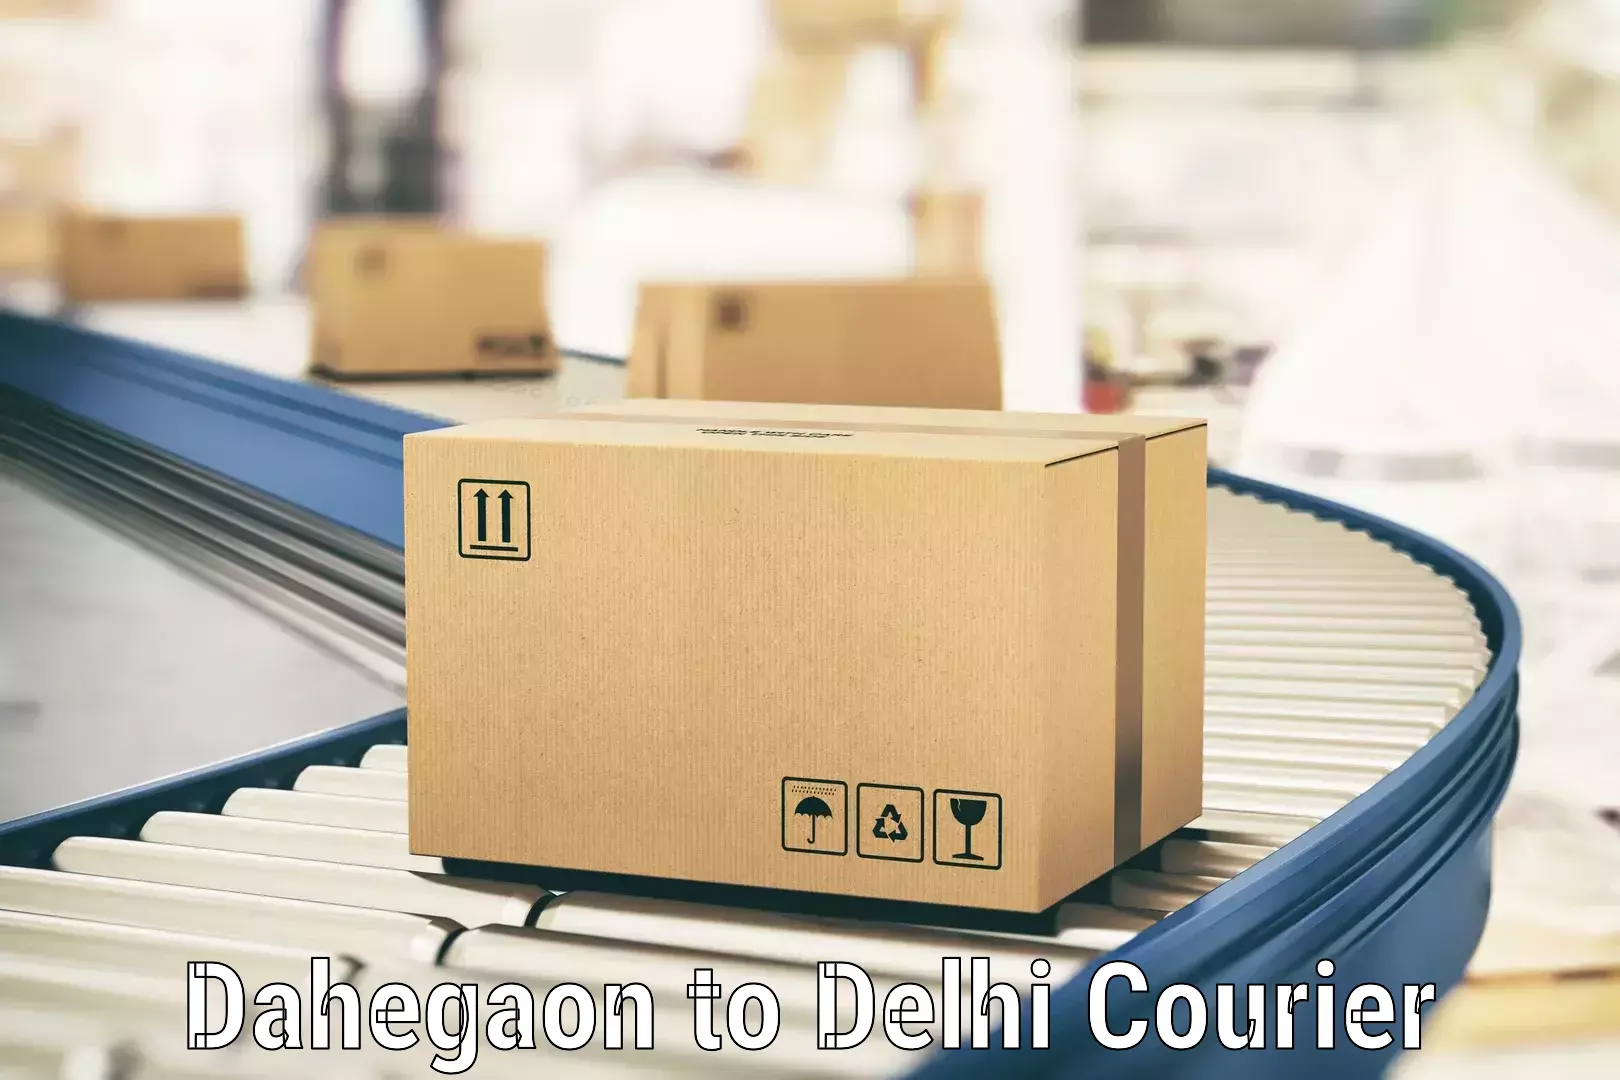 Courier service innovation Dahegaon to Krishna Nagar